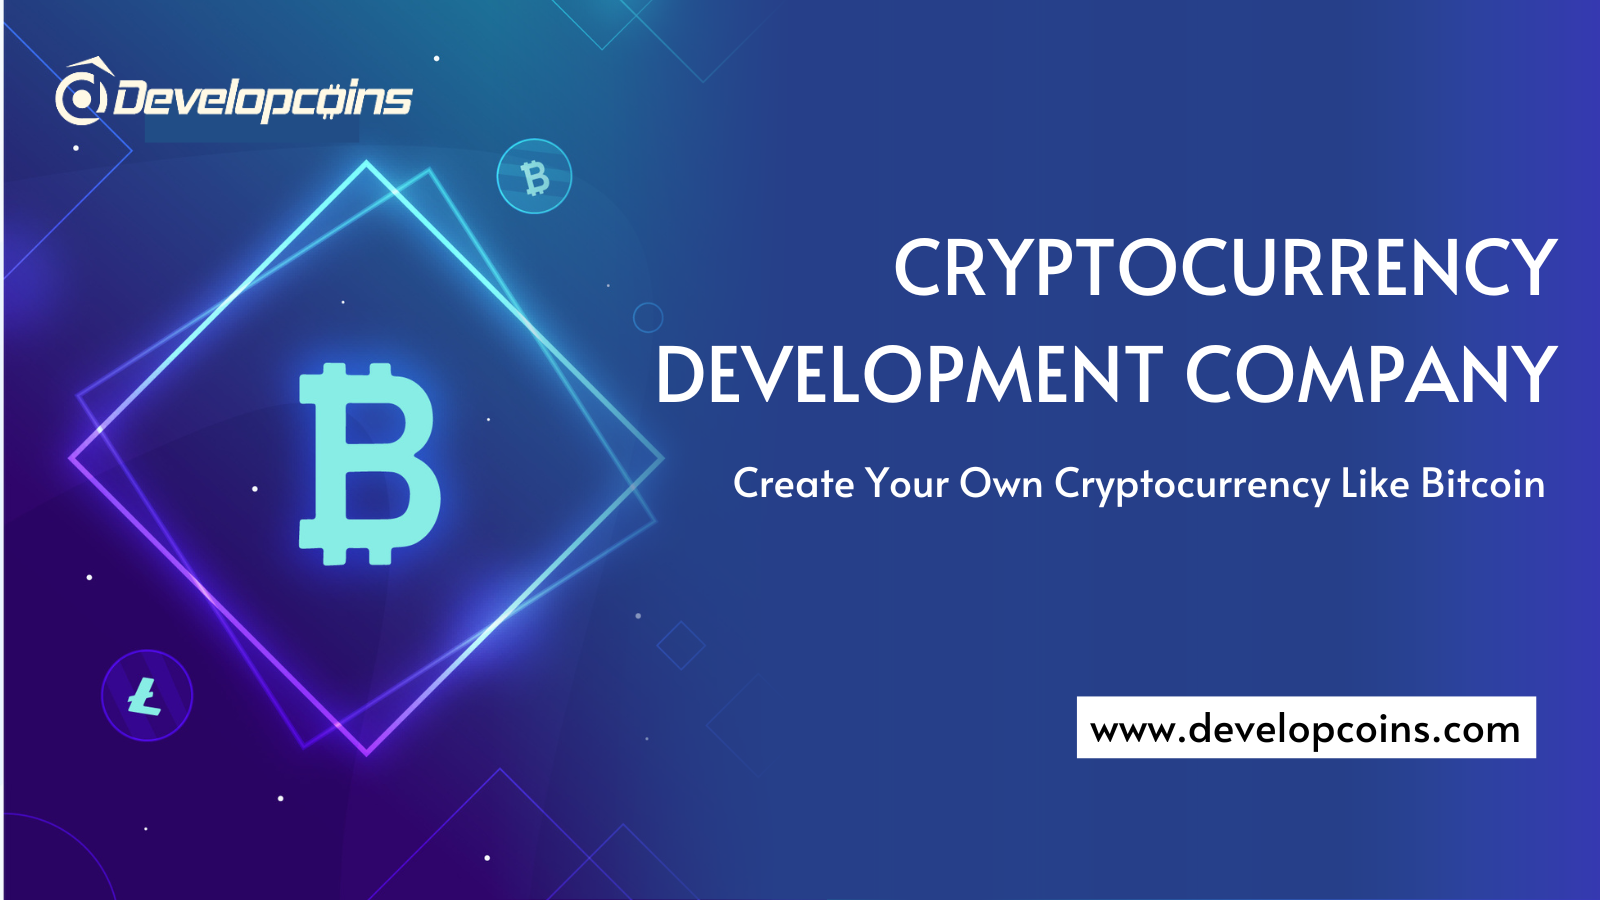 Developcoins – Cryptocurrency Development Company